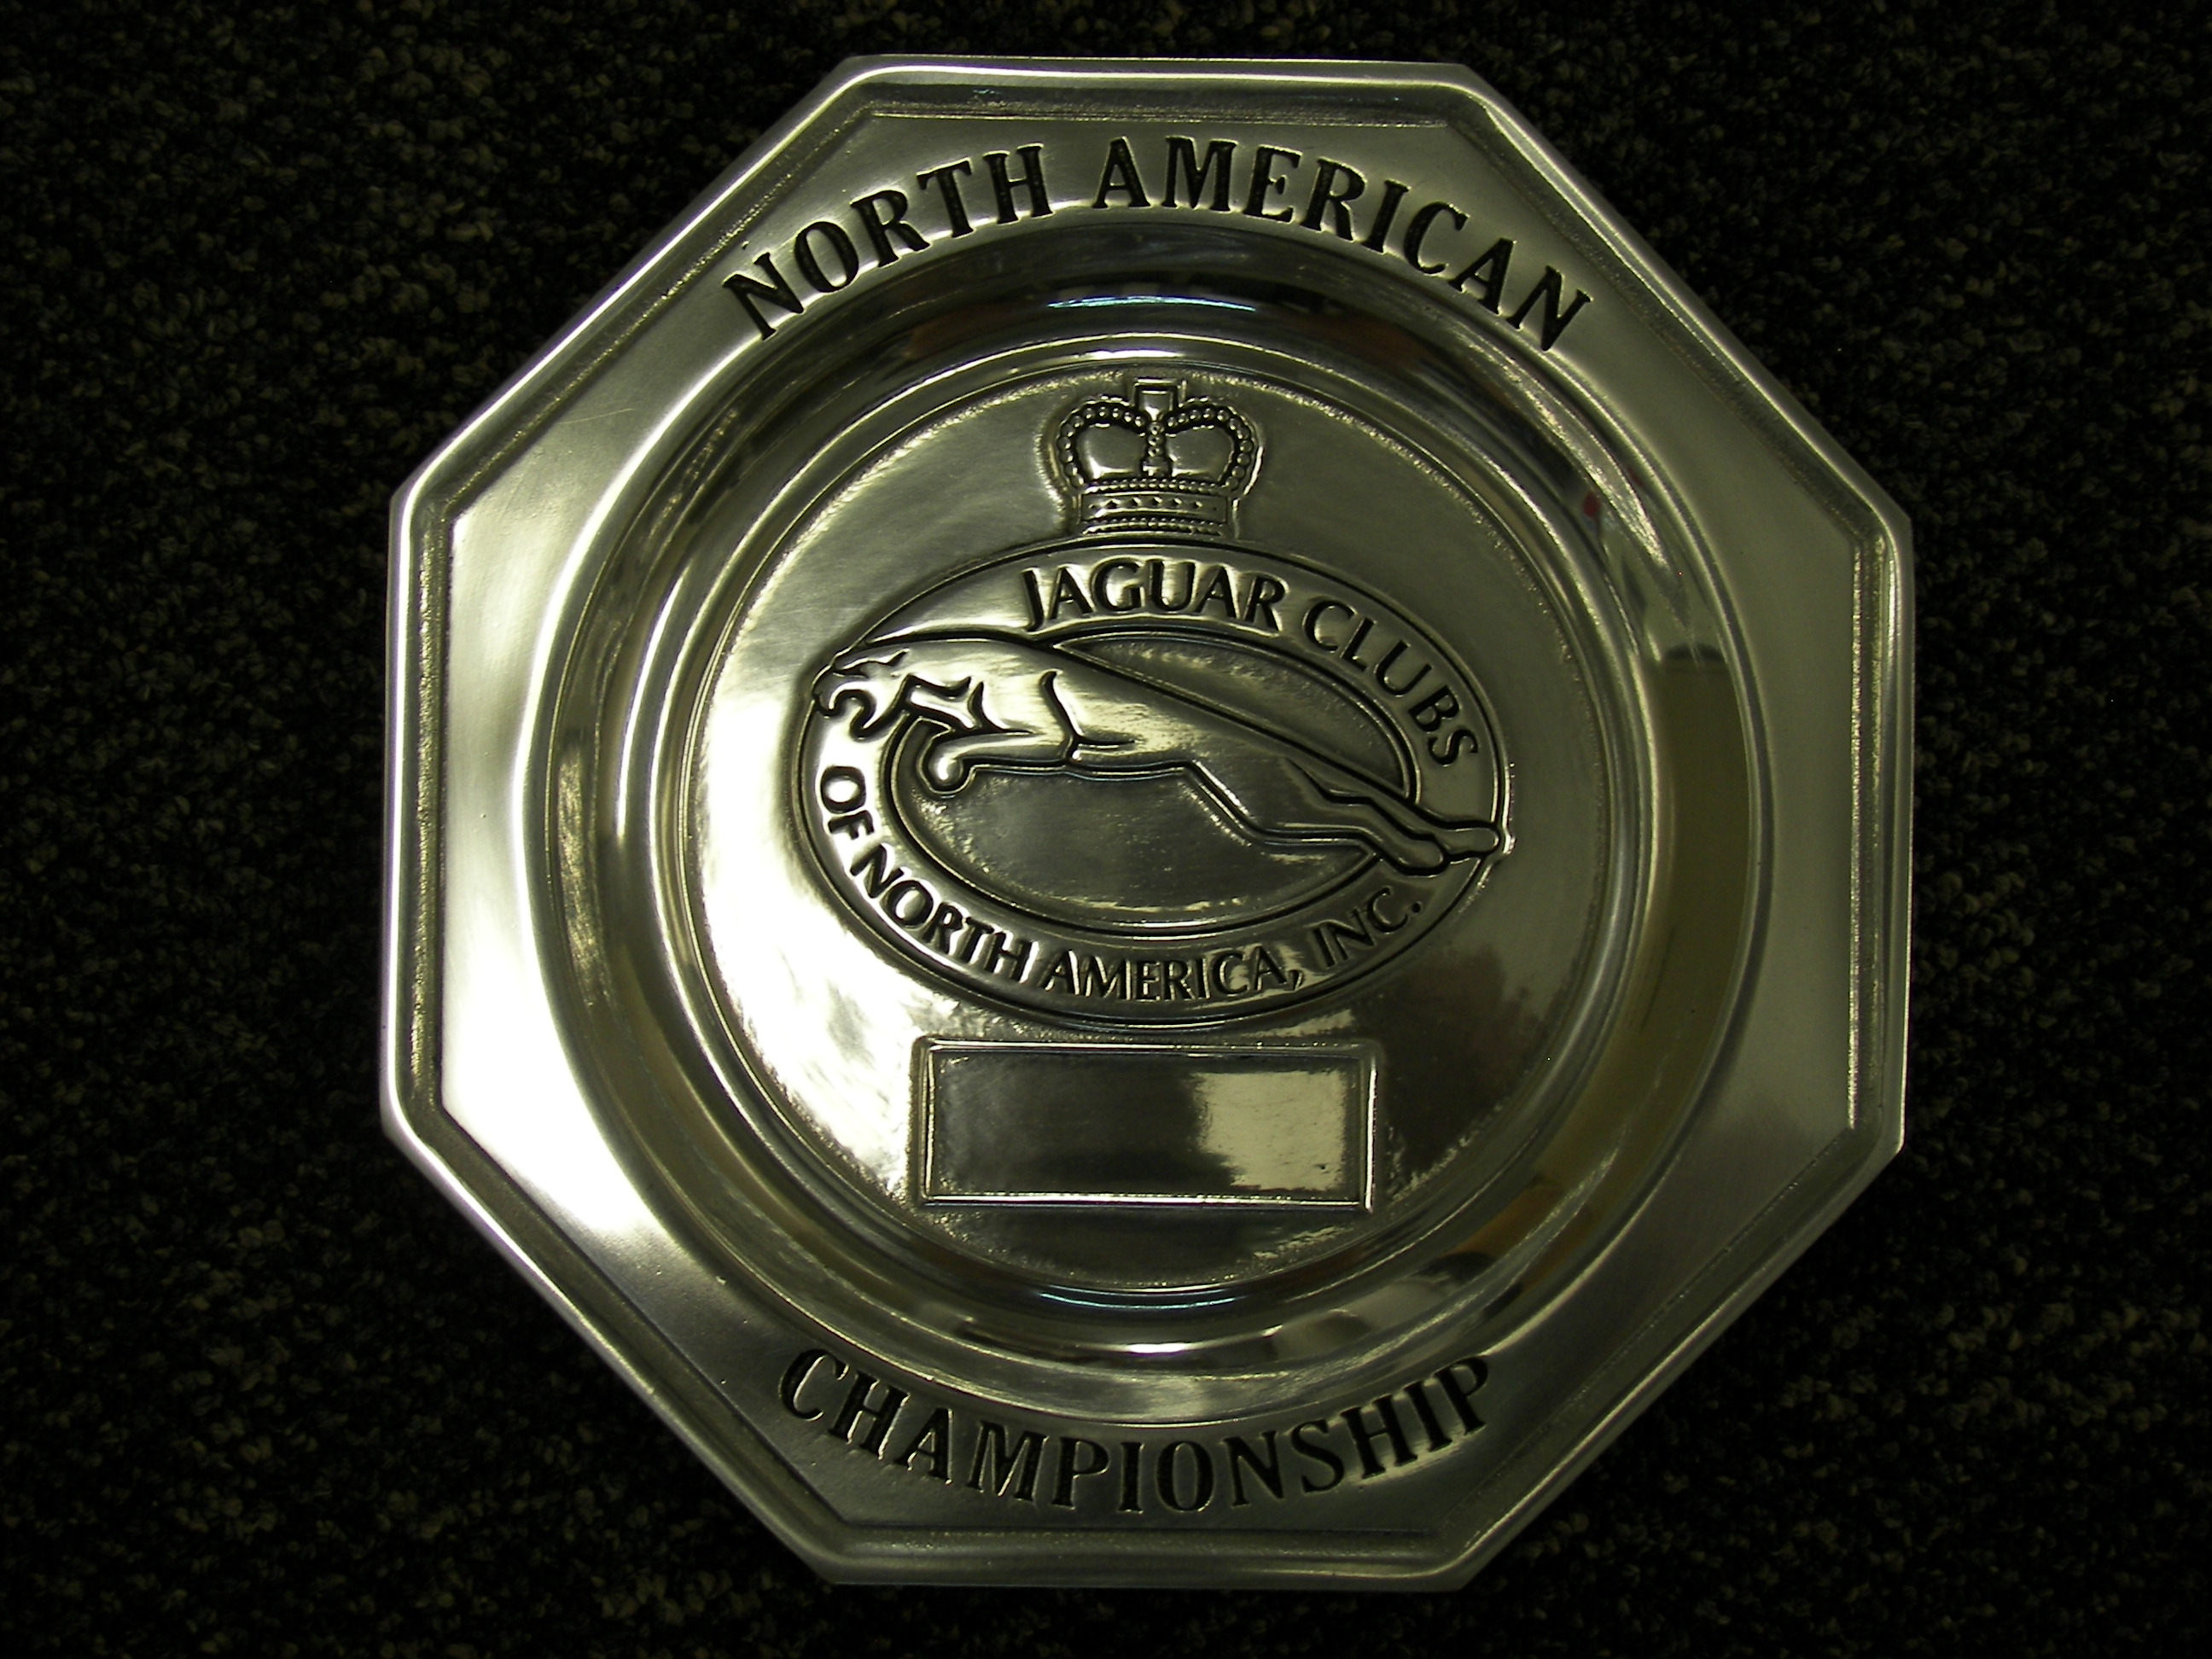 Championship Trophy North America